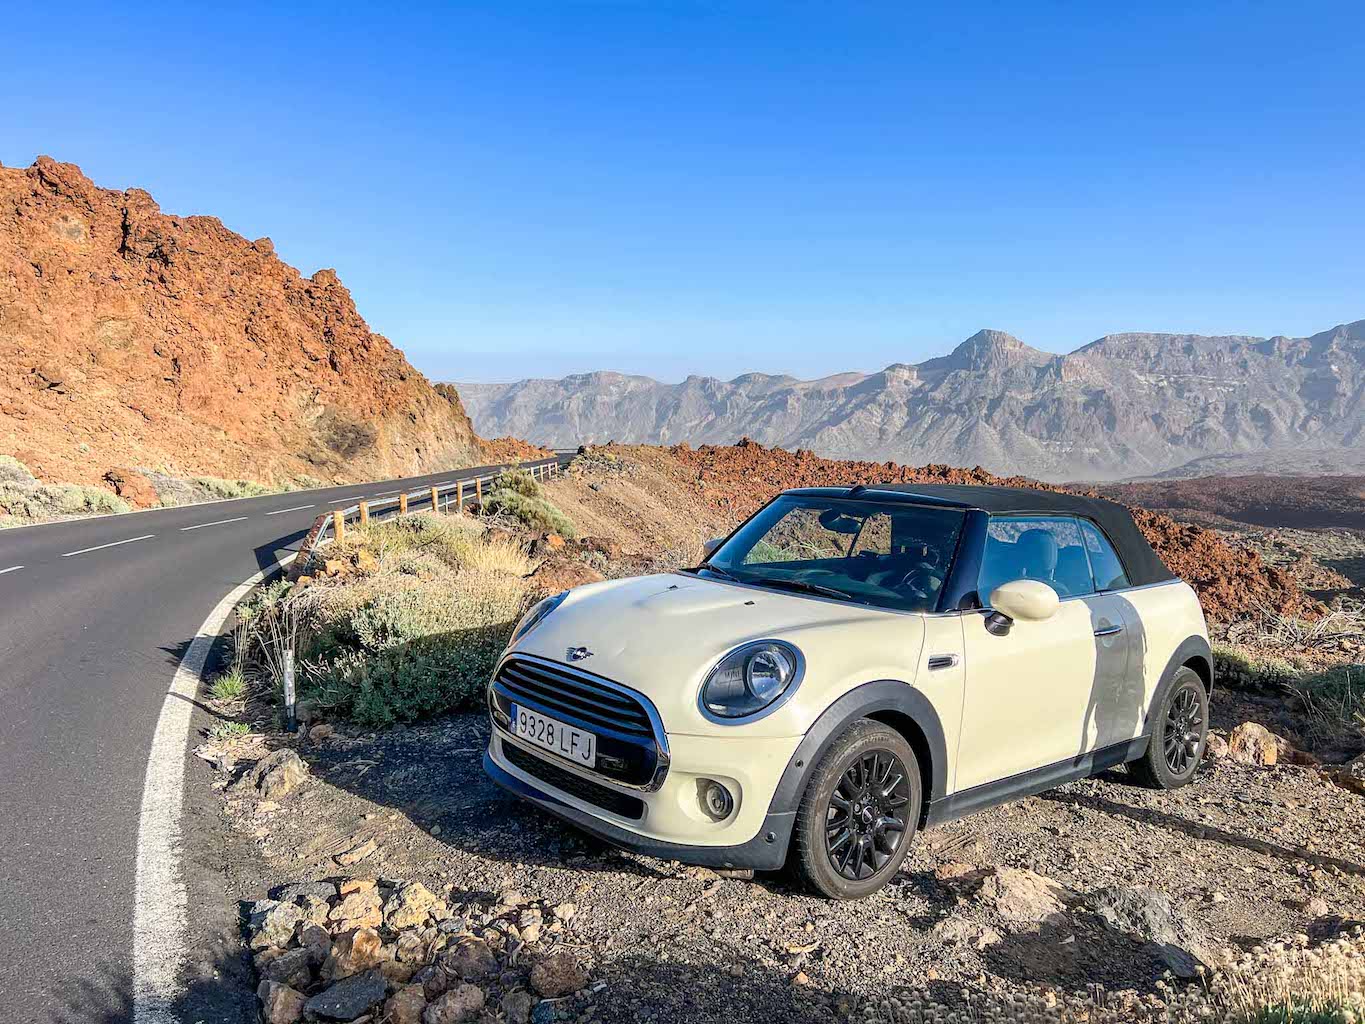 Tenerife road trip, cream mini hire car in national park